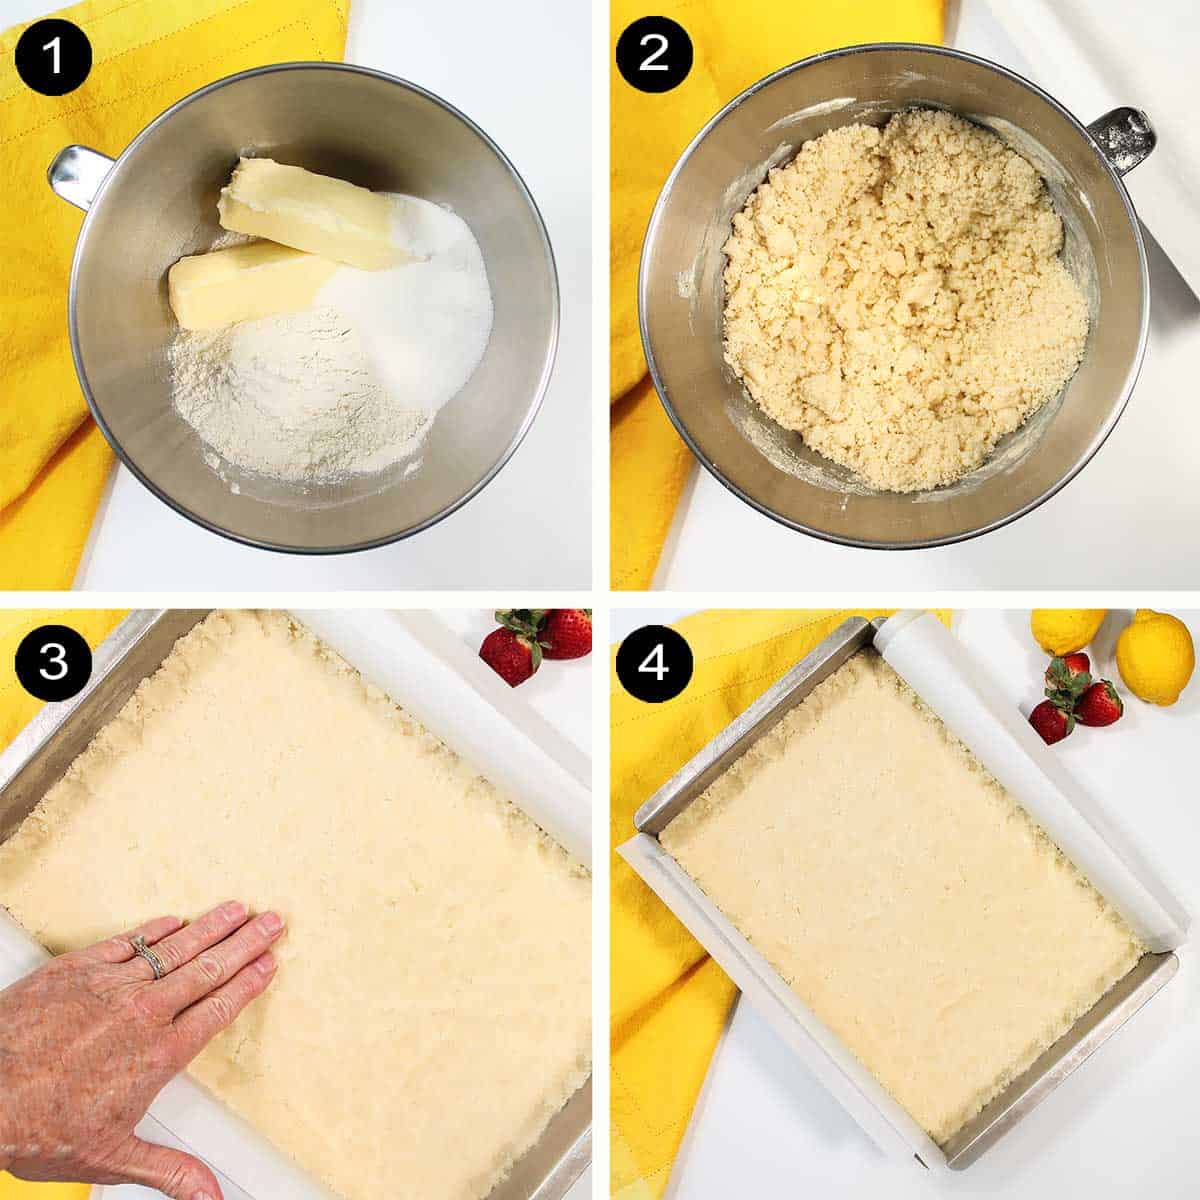 Steps to make shortbread crust.